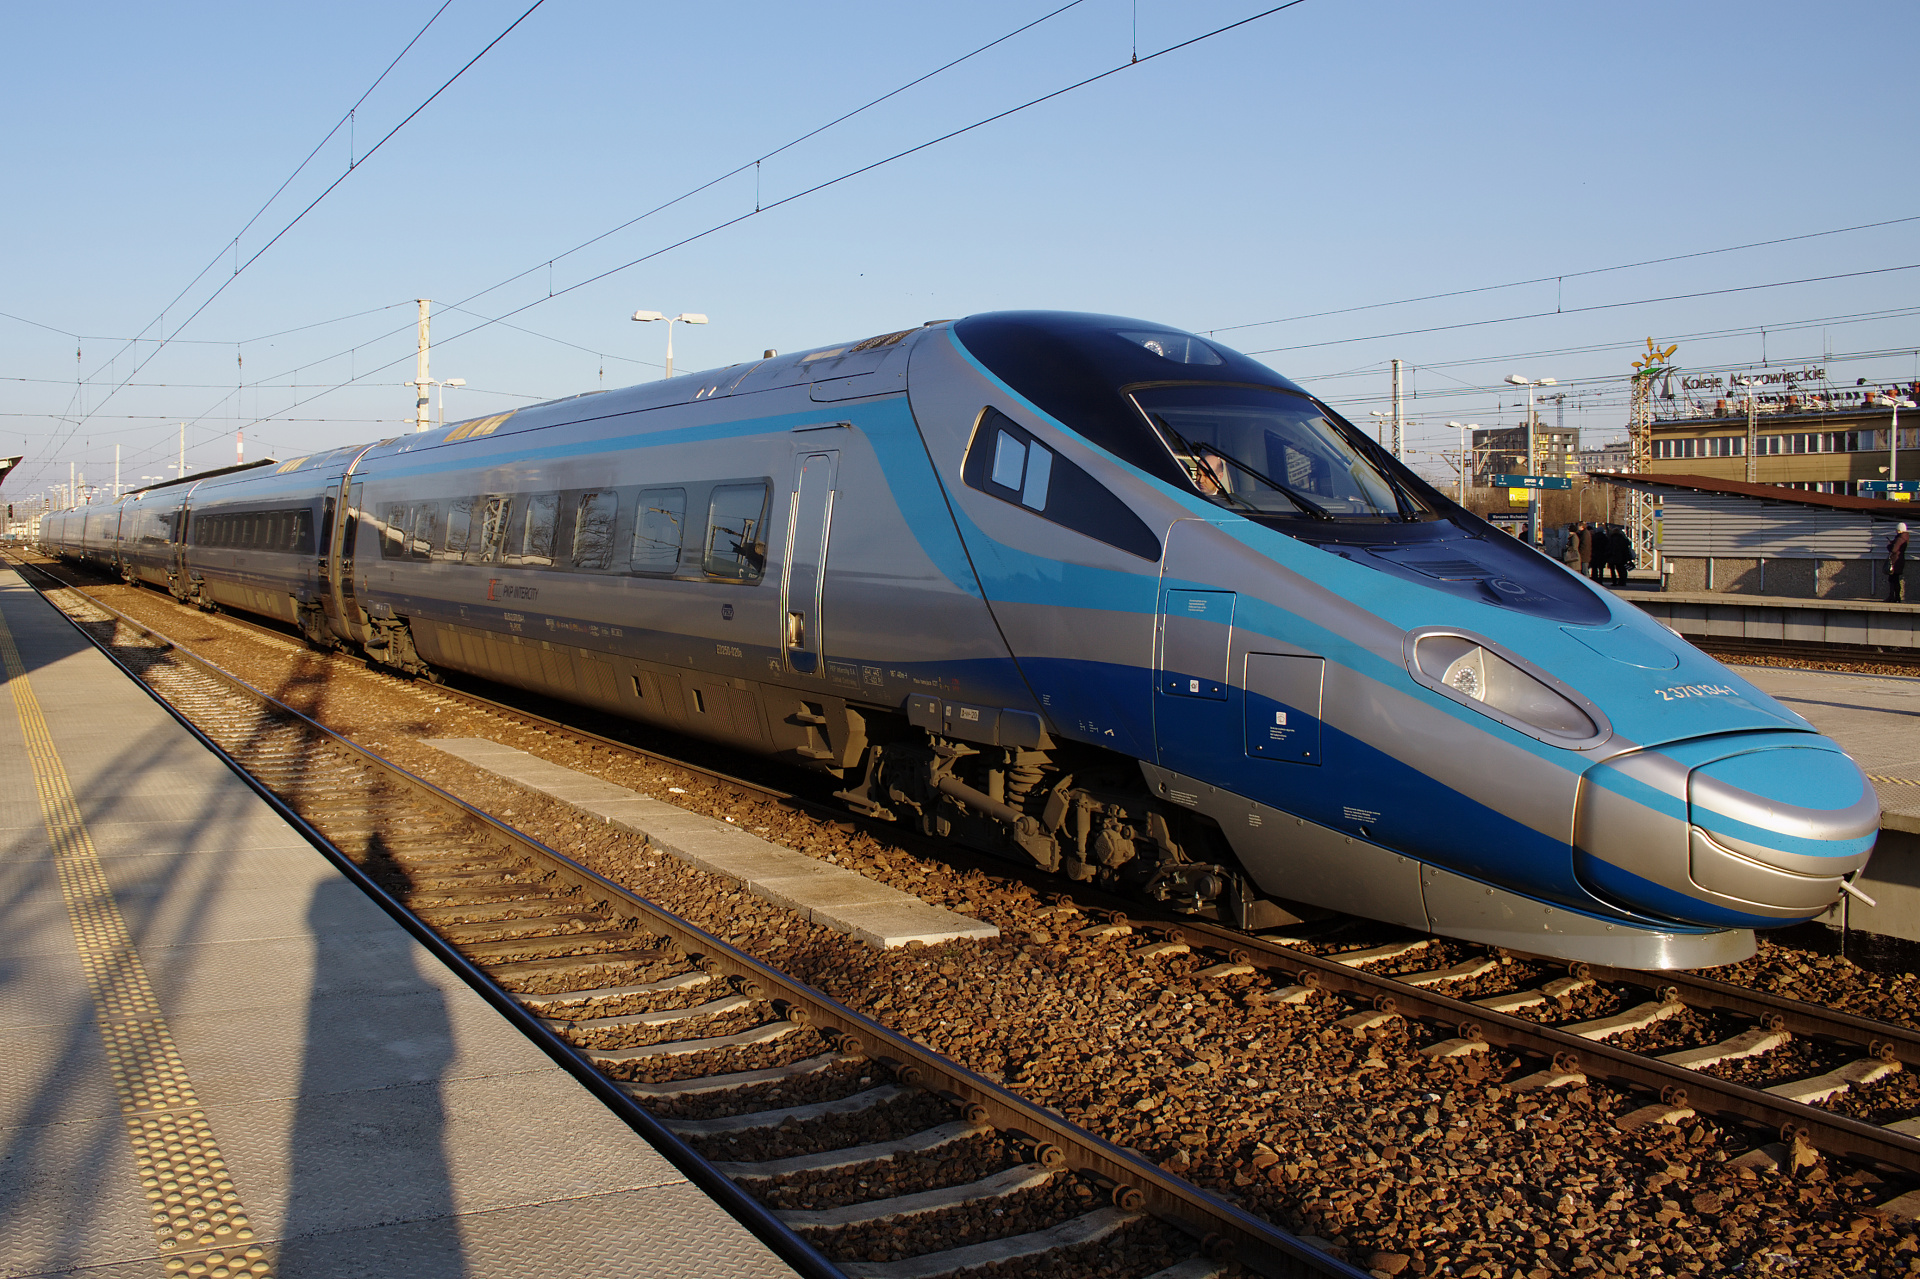 ED250-019 (Vehicles » Trains and Locomotives » Alstom ETR 610 Pendolino)